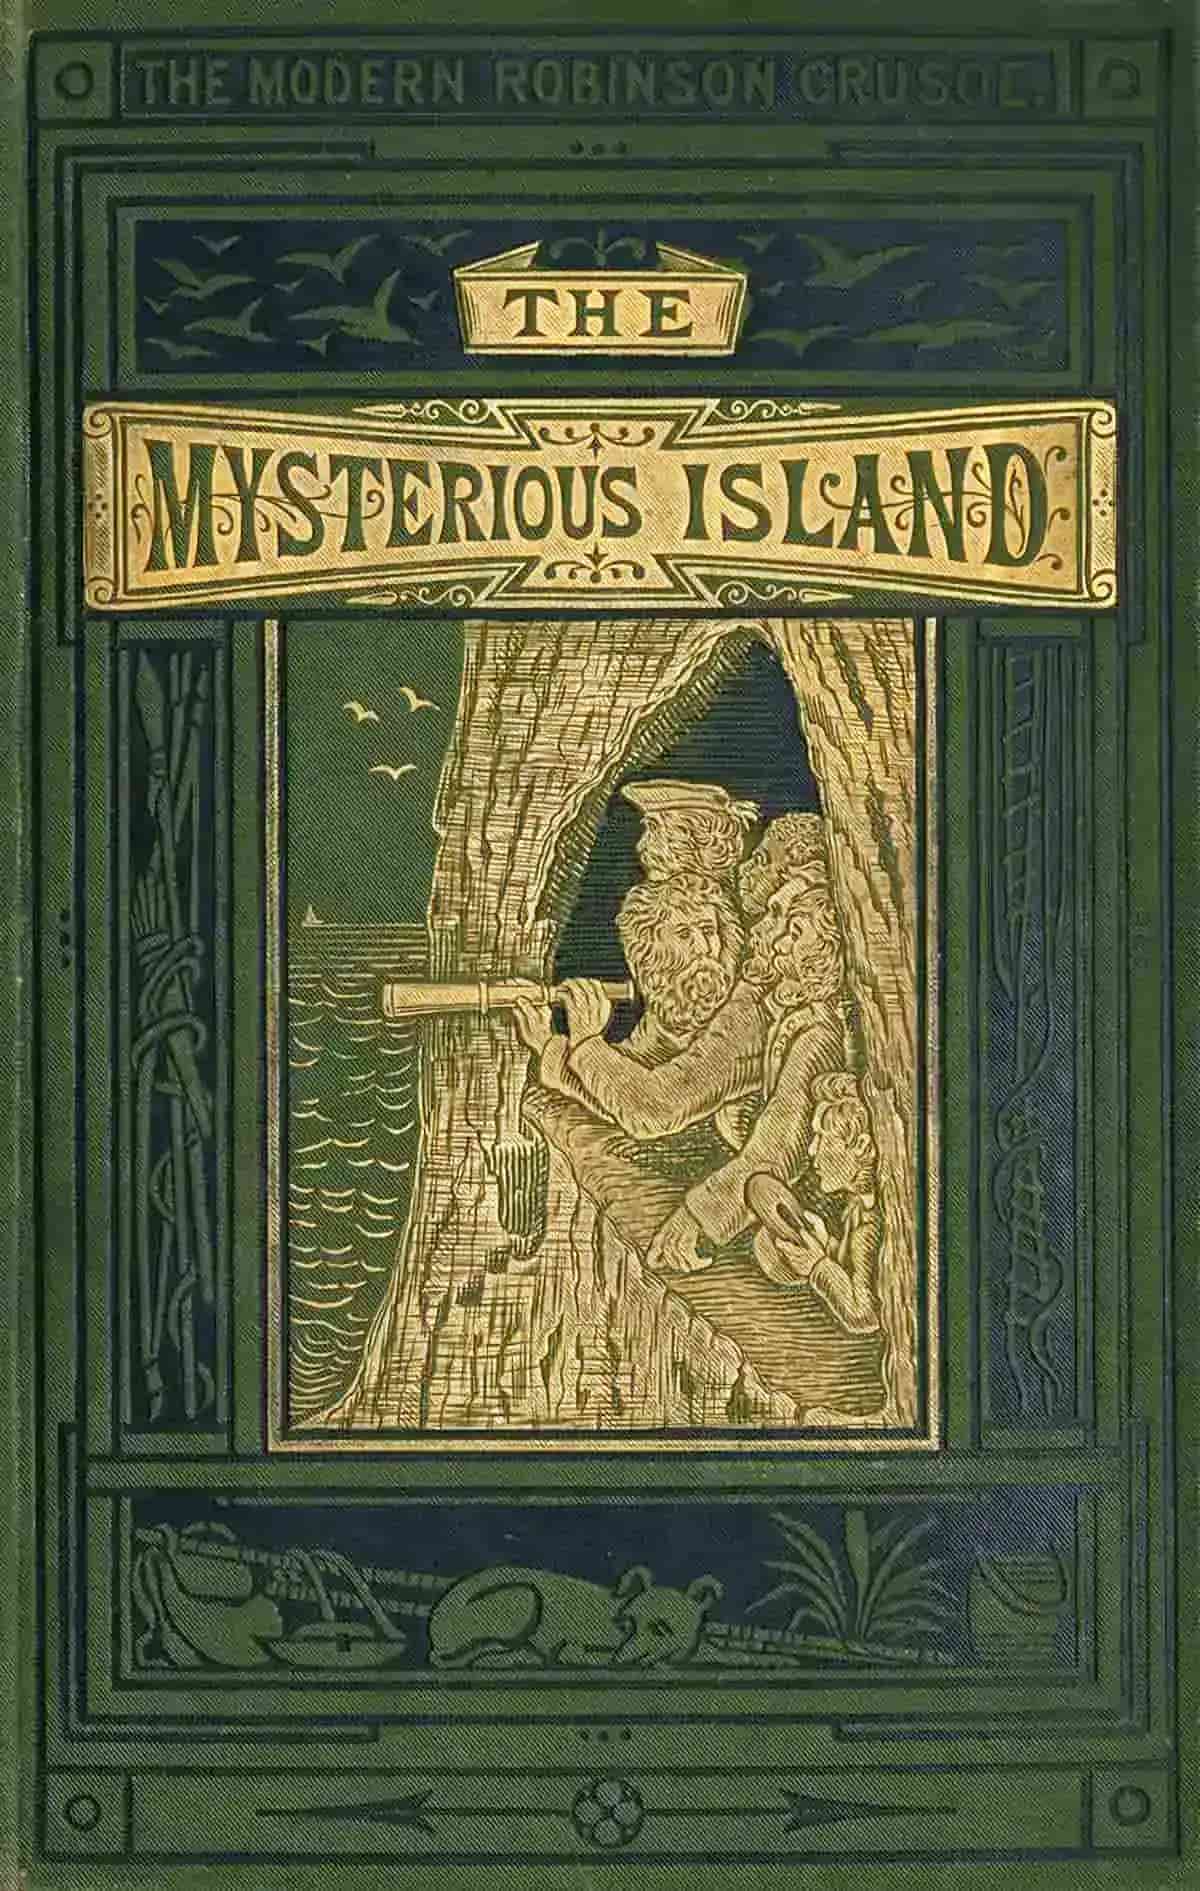 Islands and Symbolism in Literature